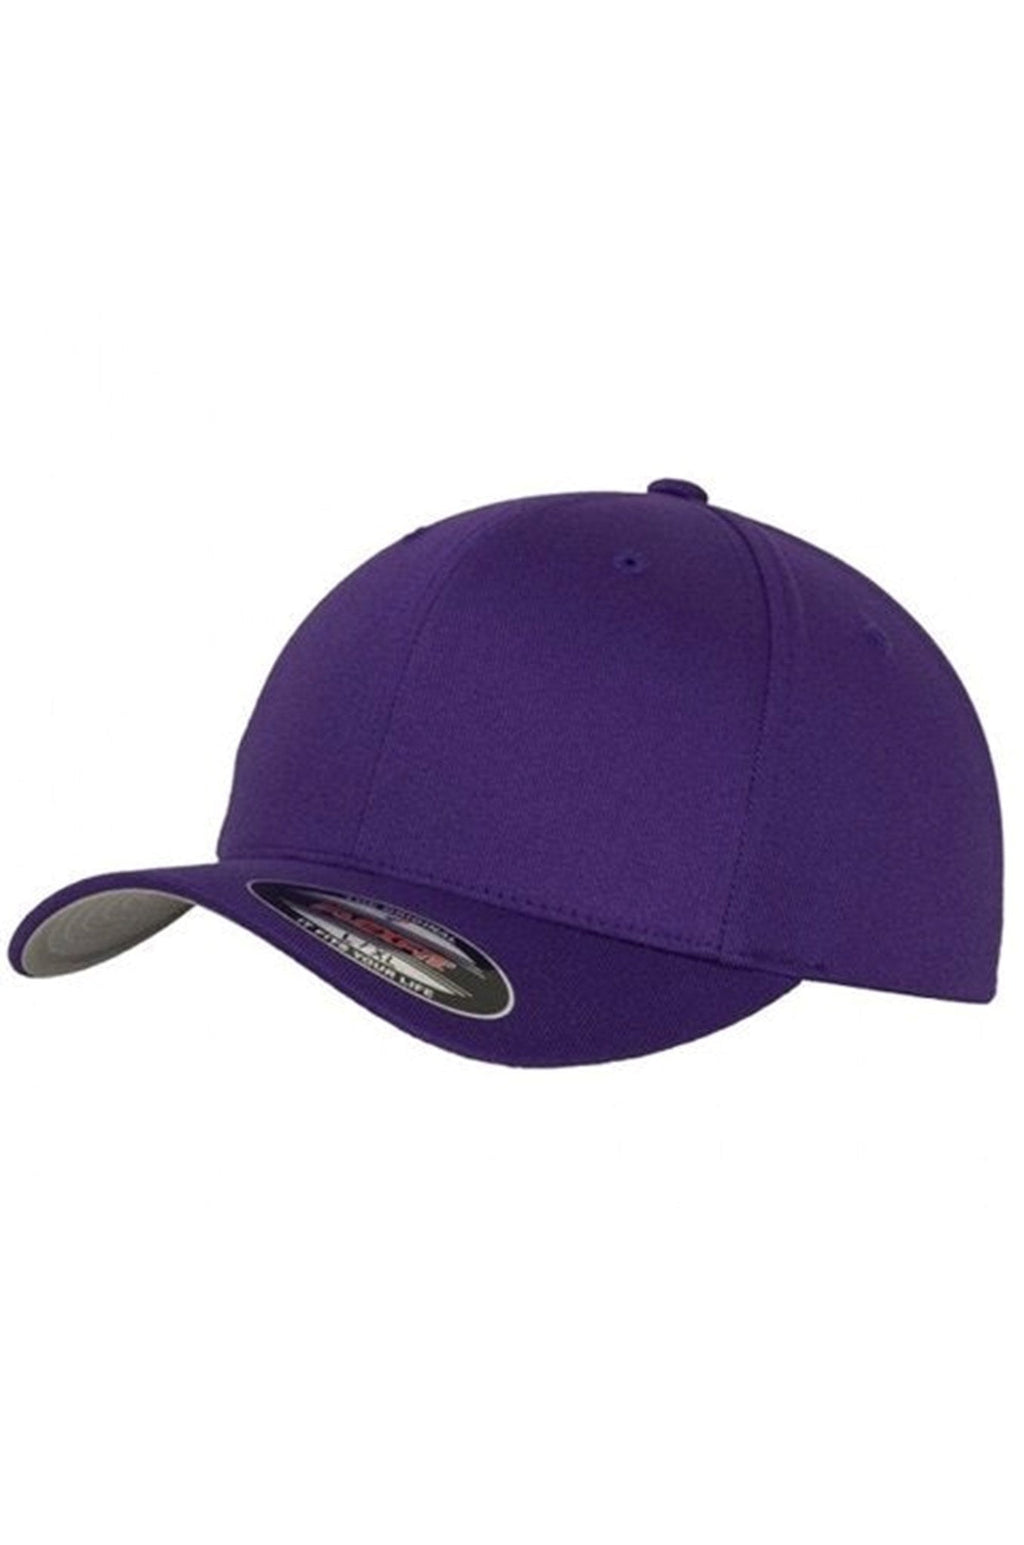 FlexFit原始棒球帽 - 紫色